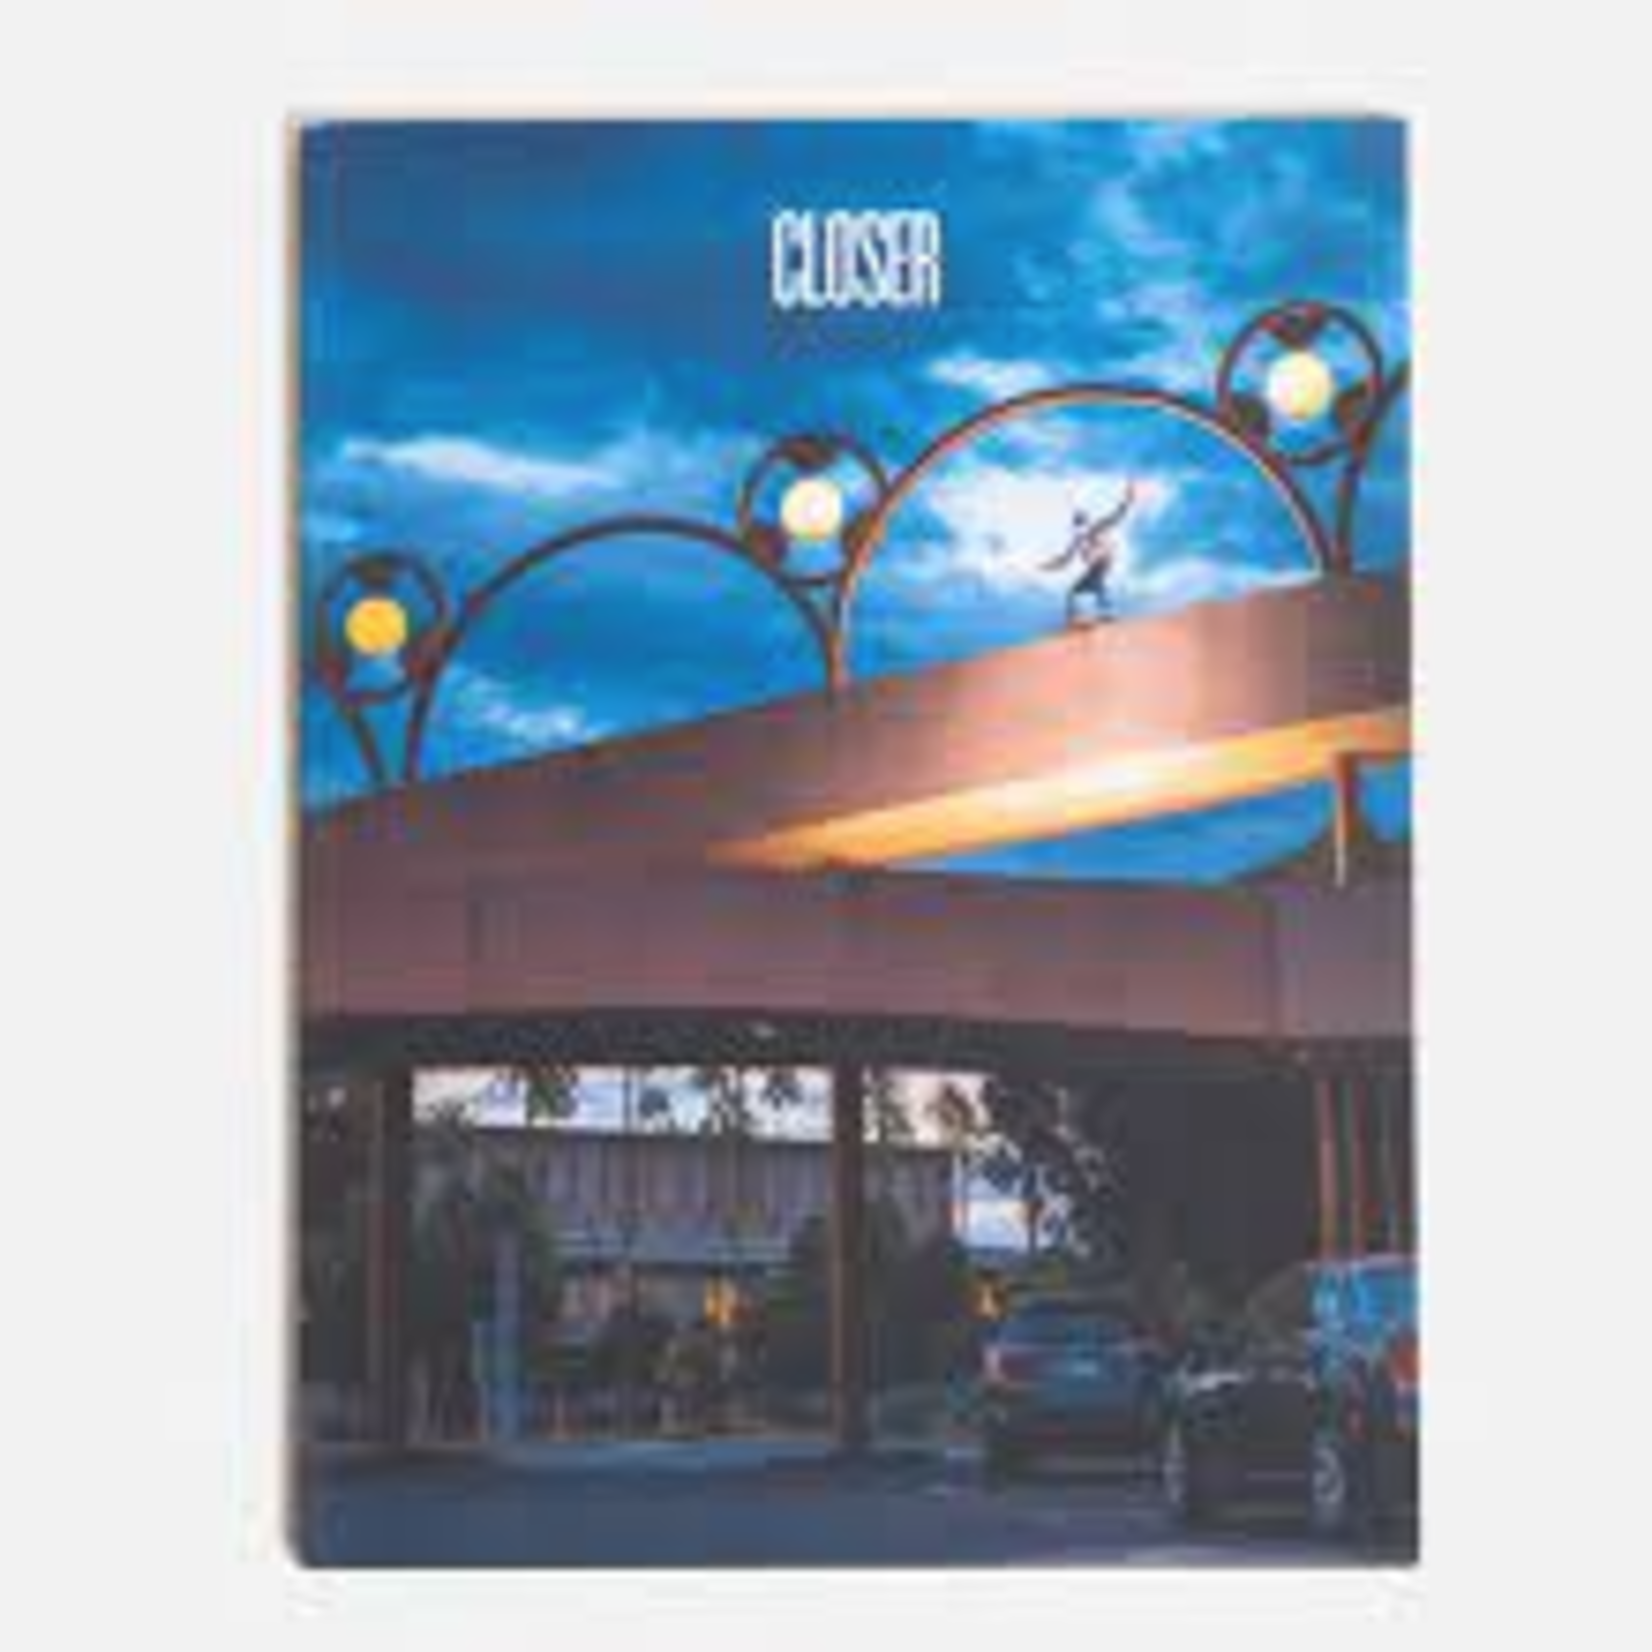 Closer Mag #4